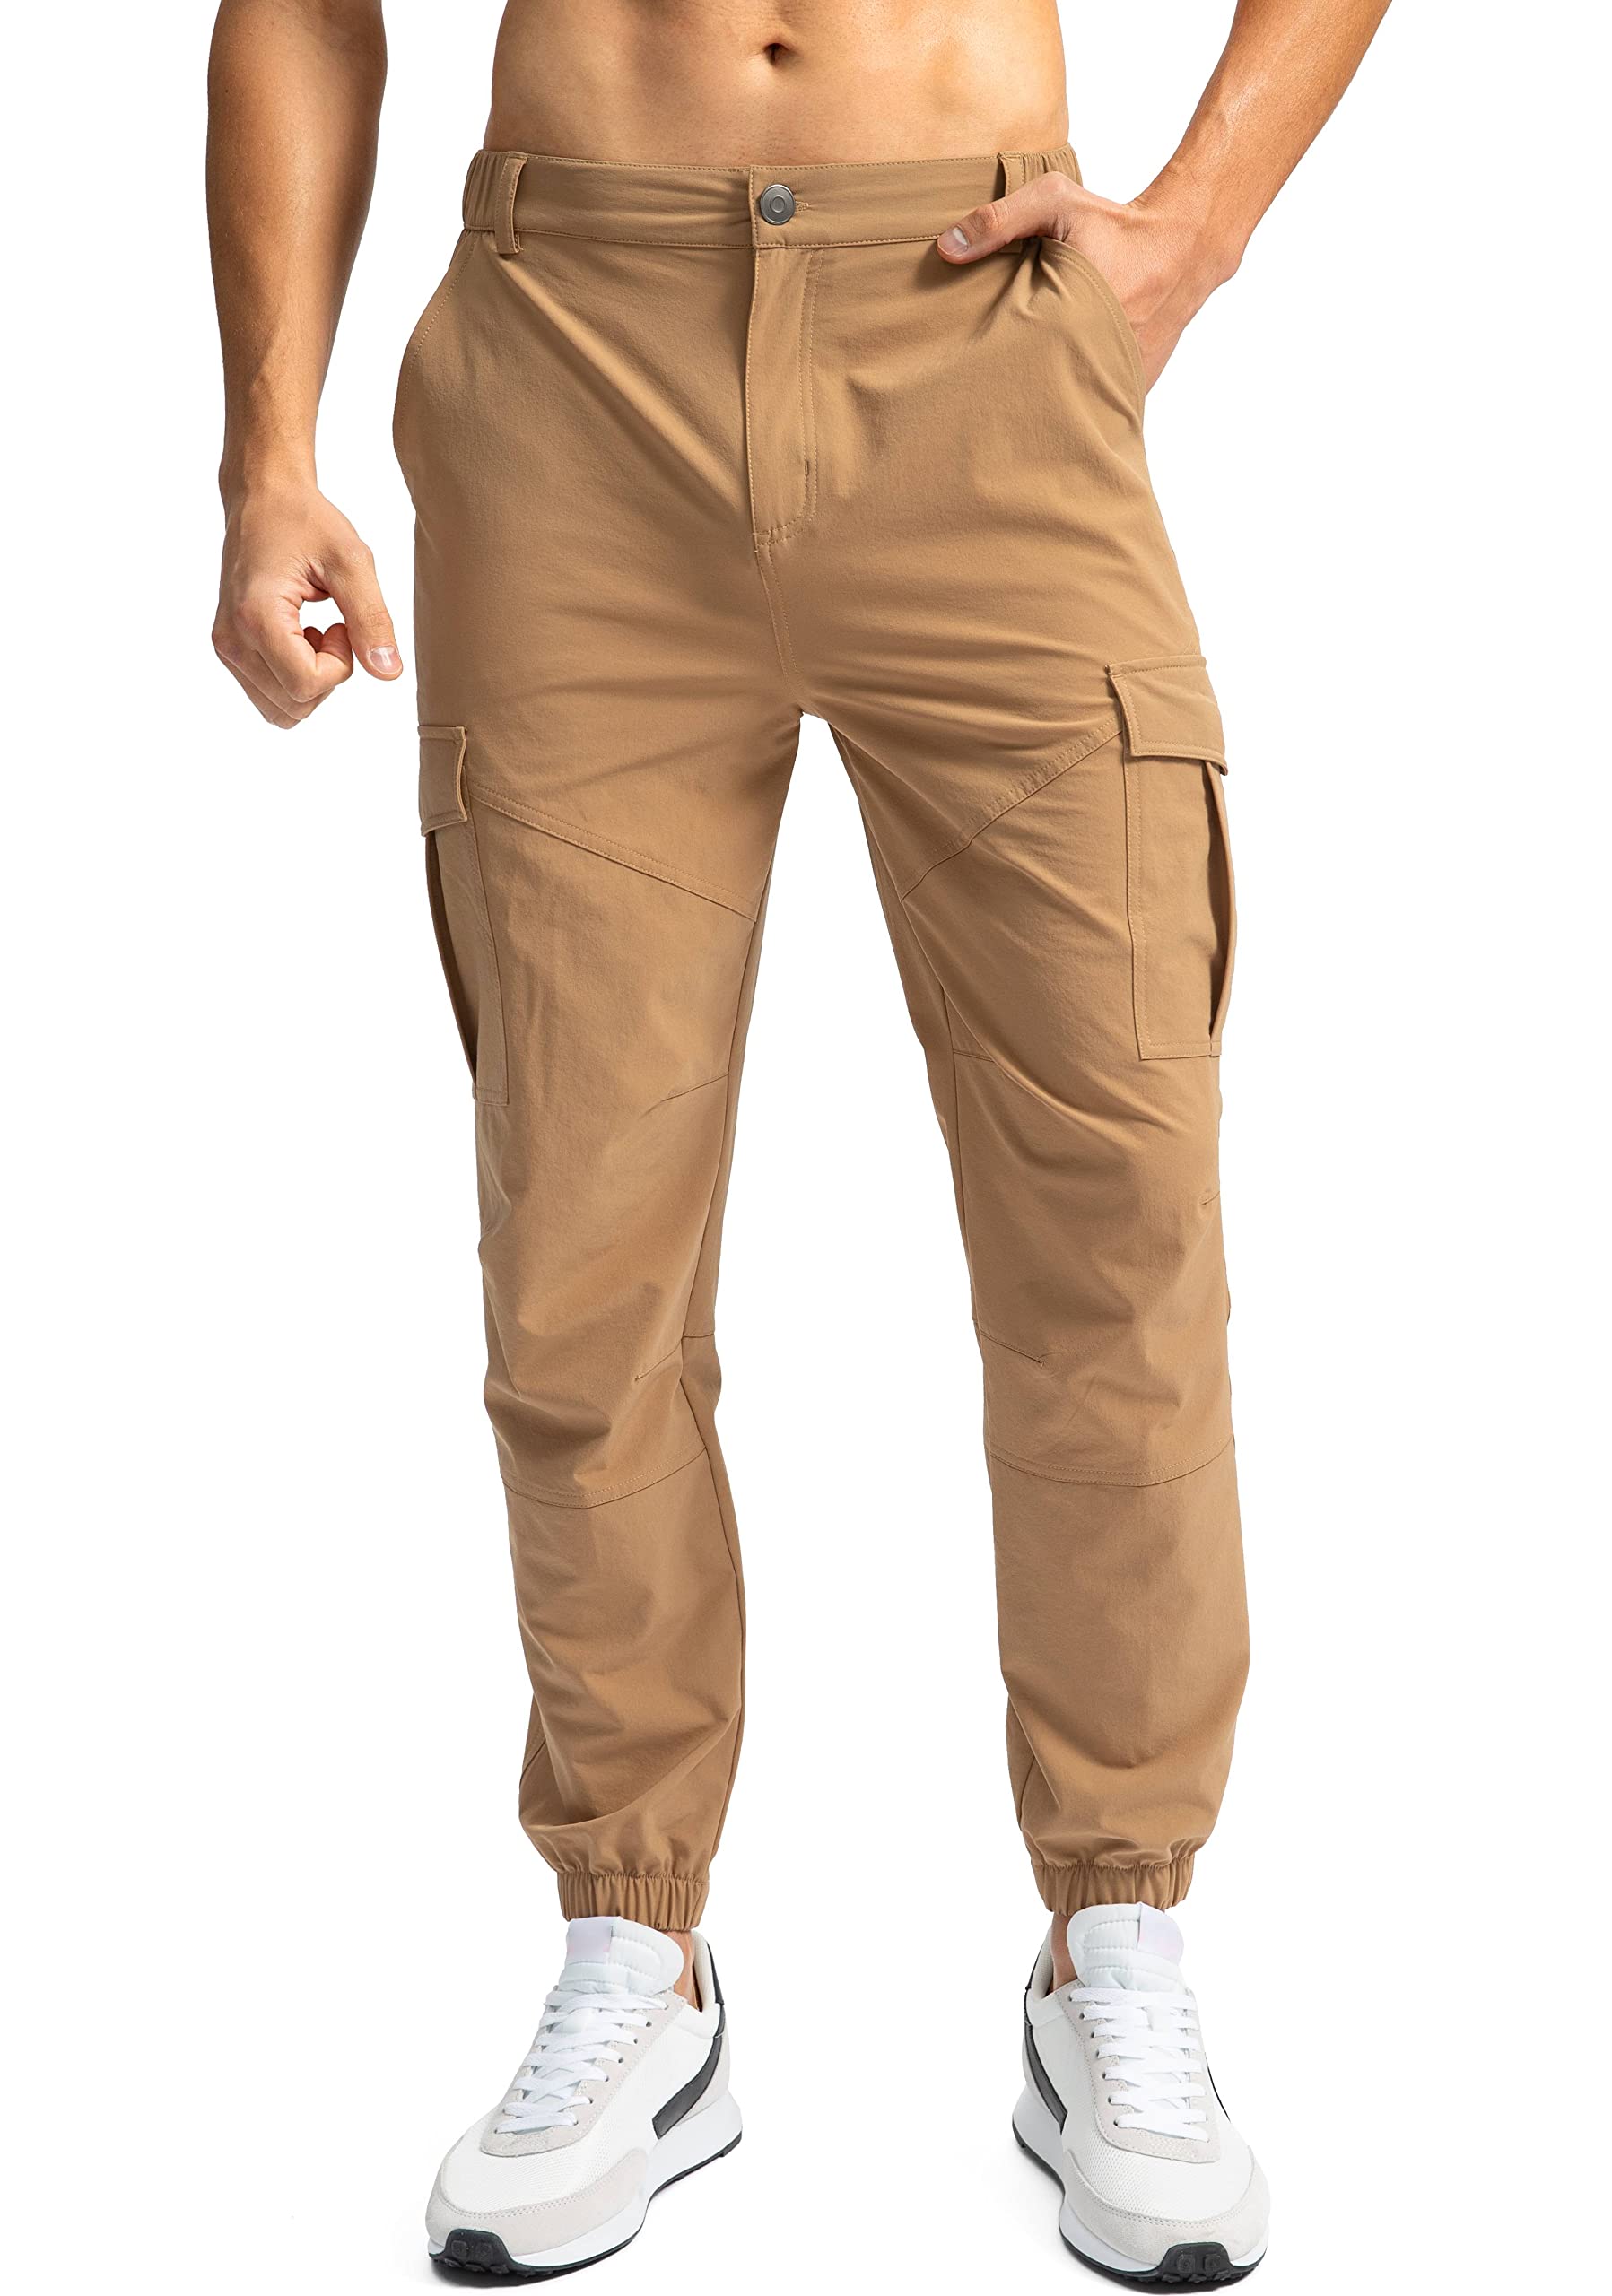 Pinkbomb Men's Hiking Cargo Pants with 7 Pockets Slim Fit Stretch Joggers Golf Cargo Work Pants for Men(Dark Khaki, S)